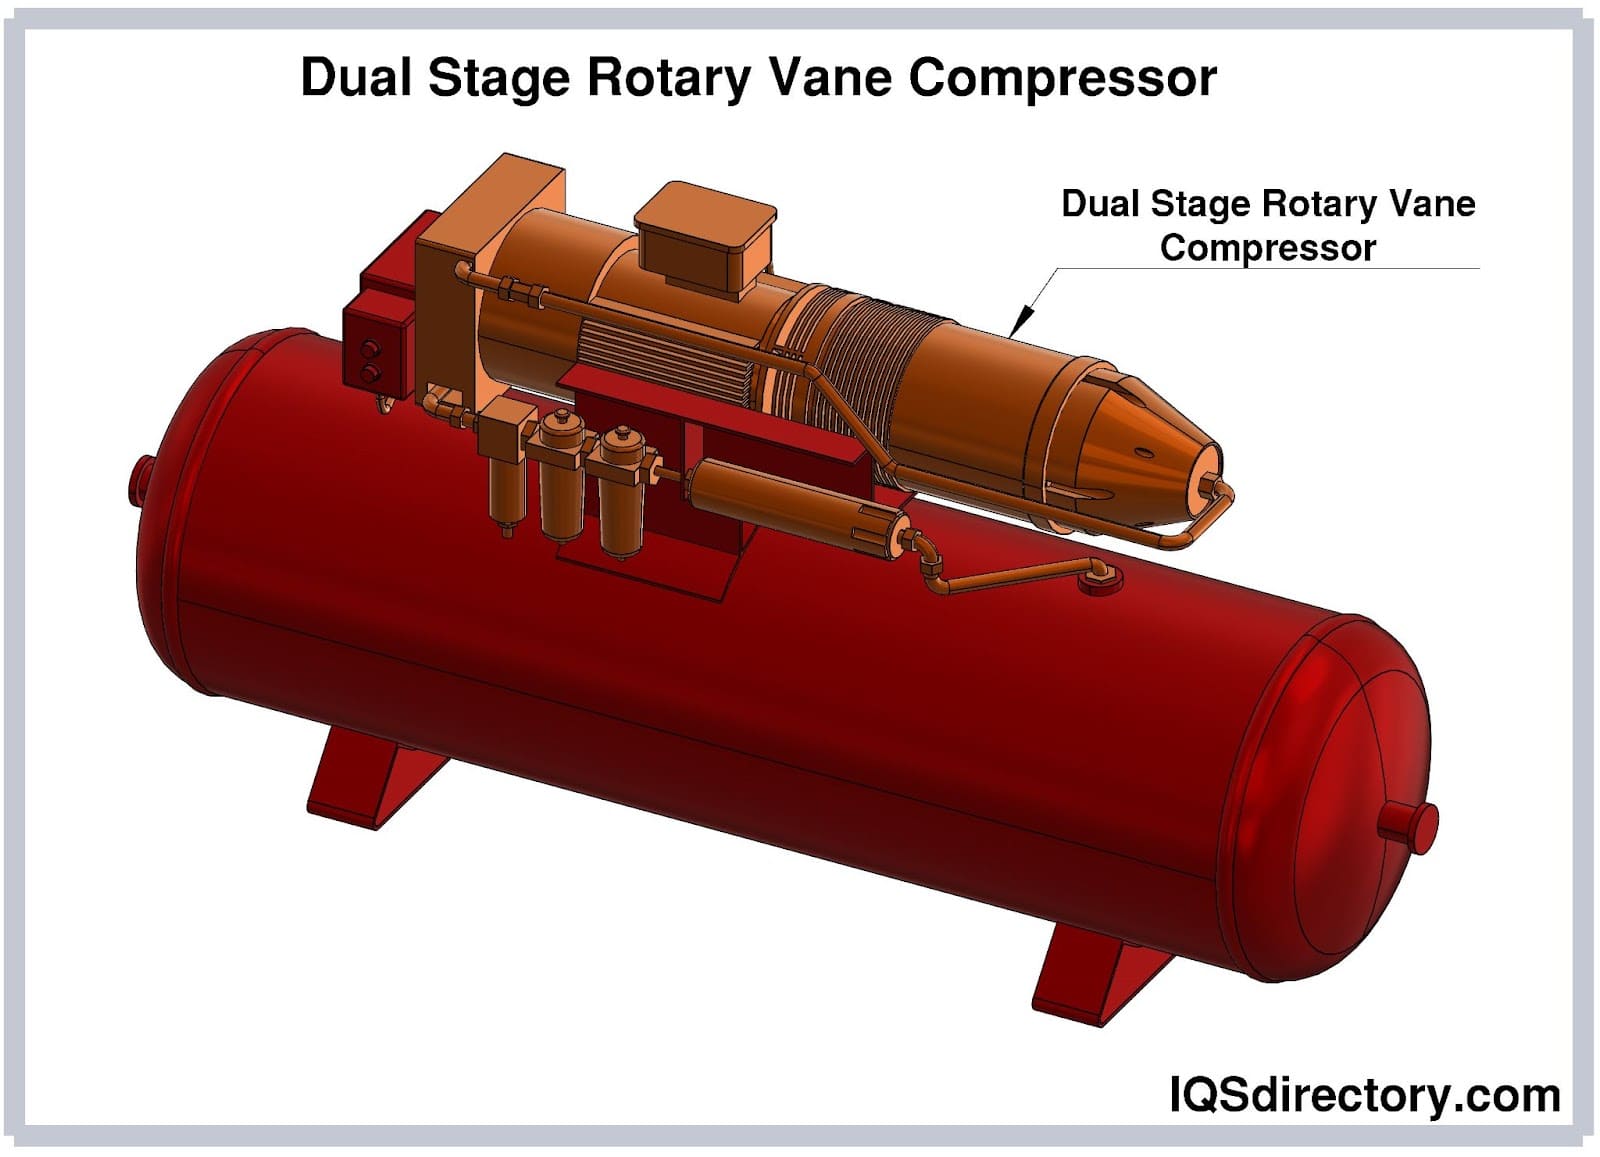 Dual Stage Rotary Vane Compressor